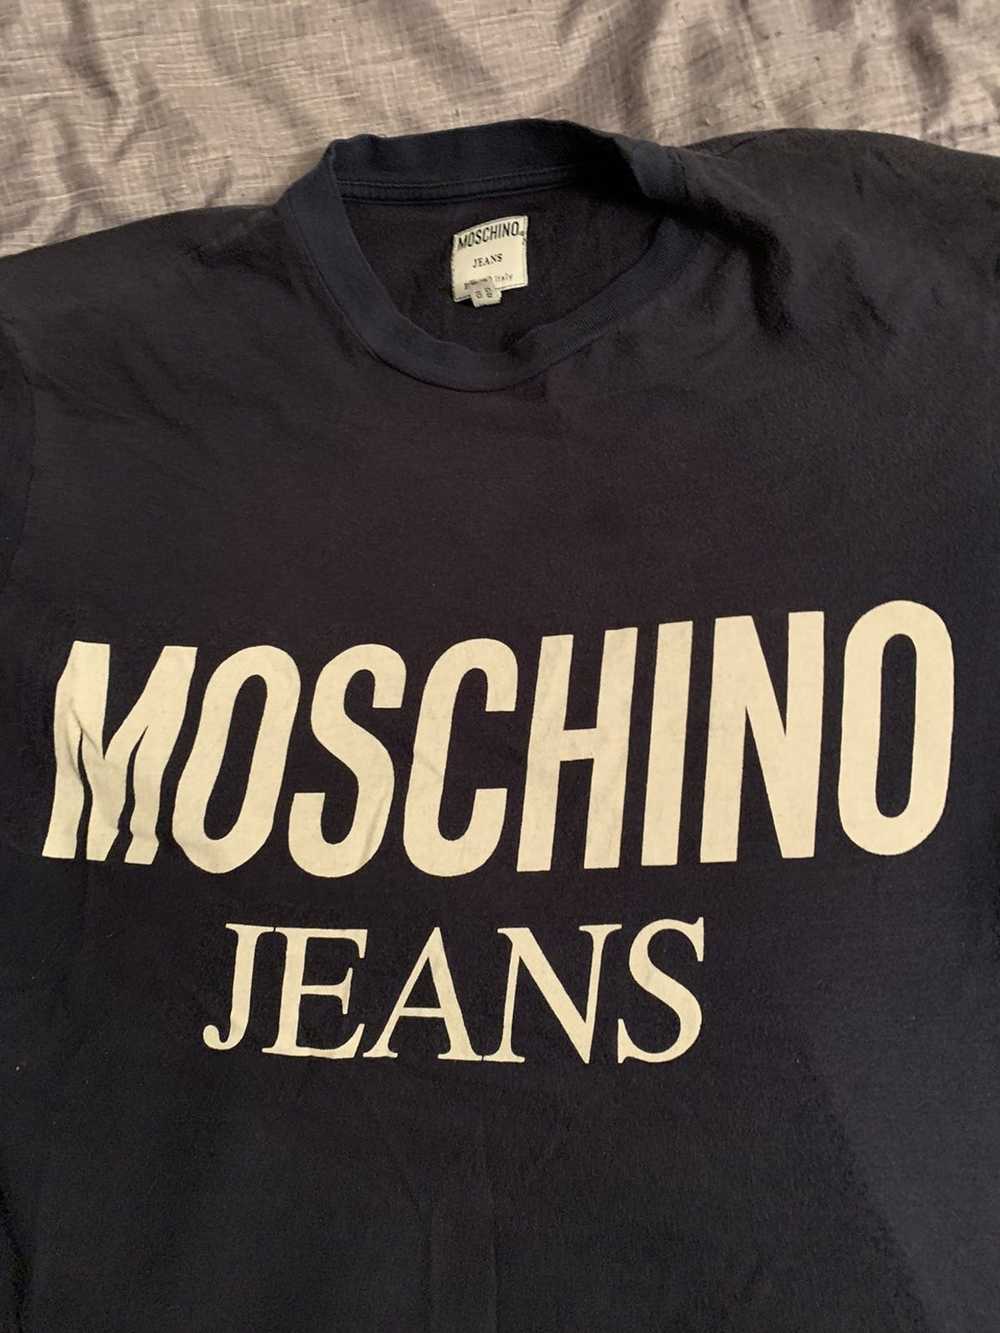 Moschino Rare Moschino jeans logo tee - image 2